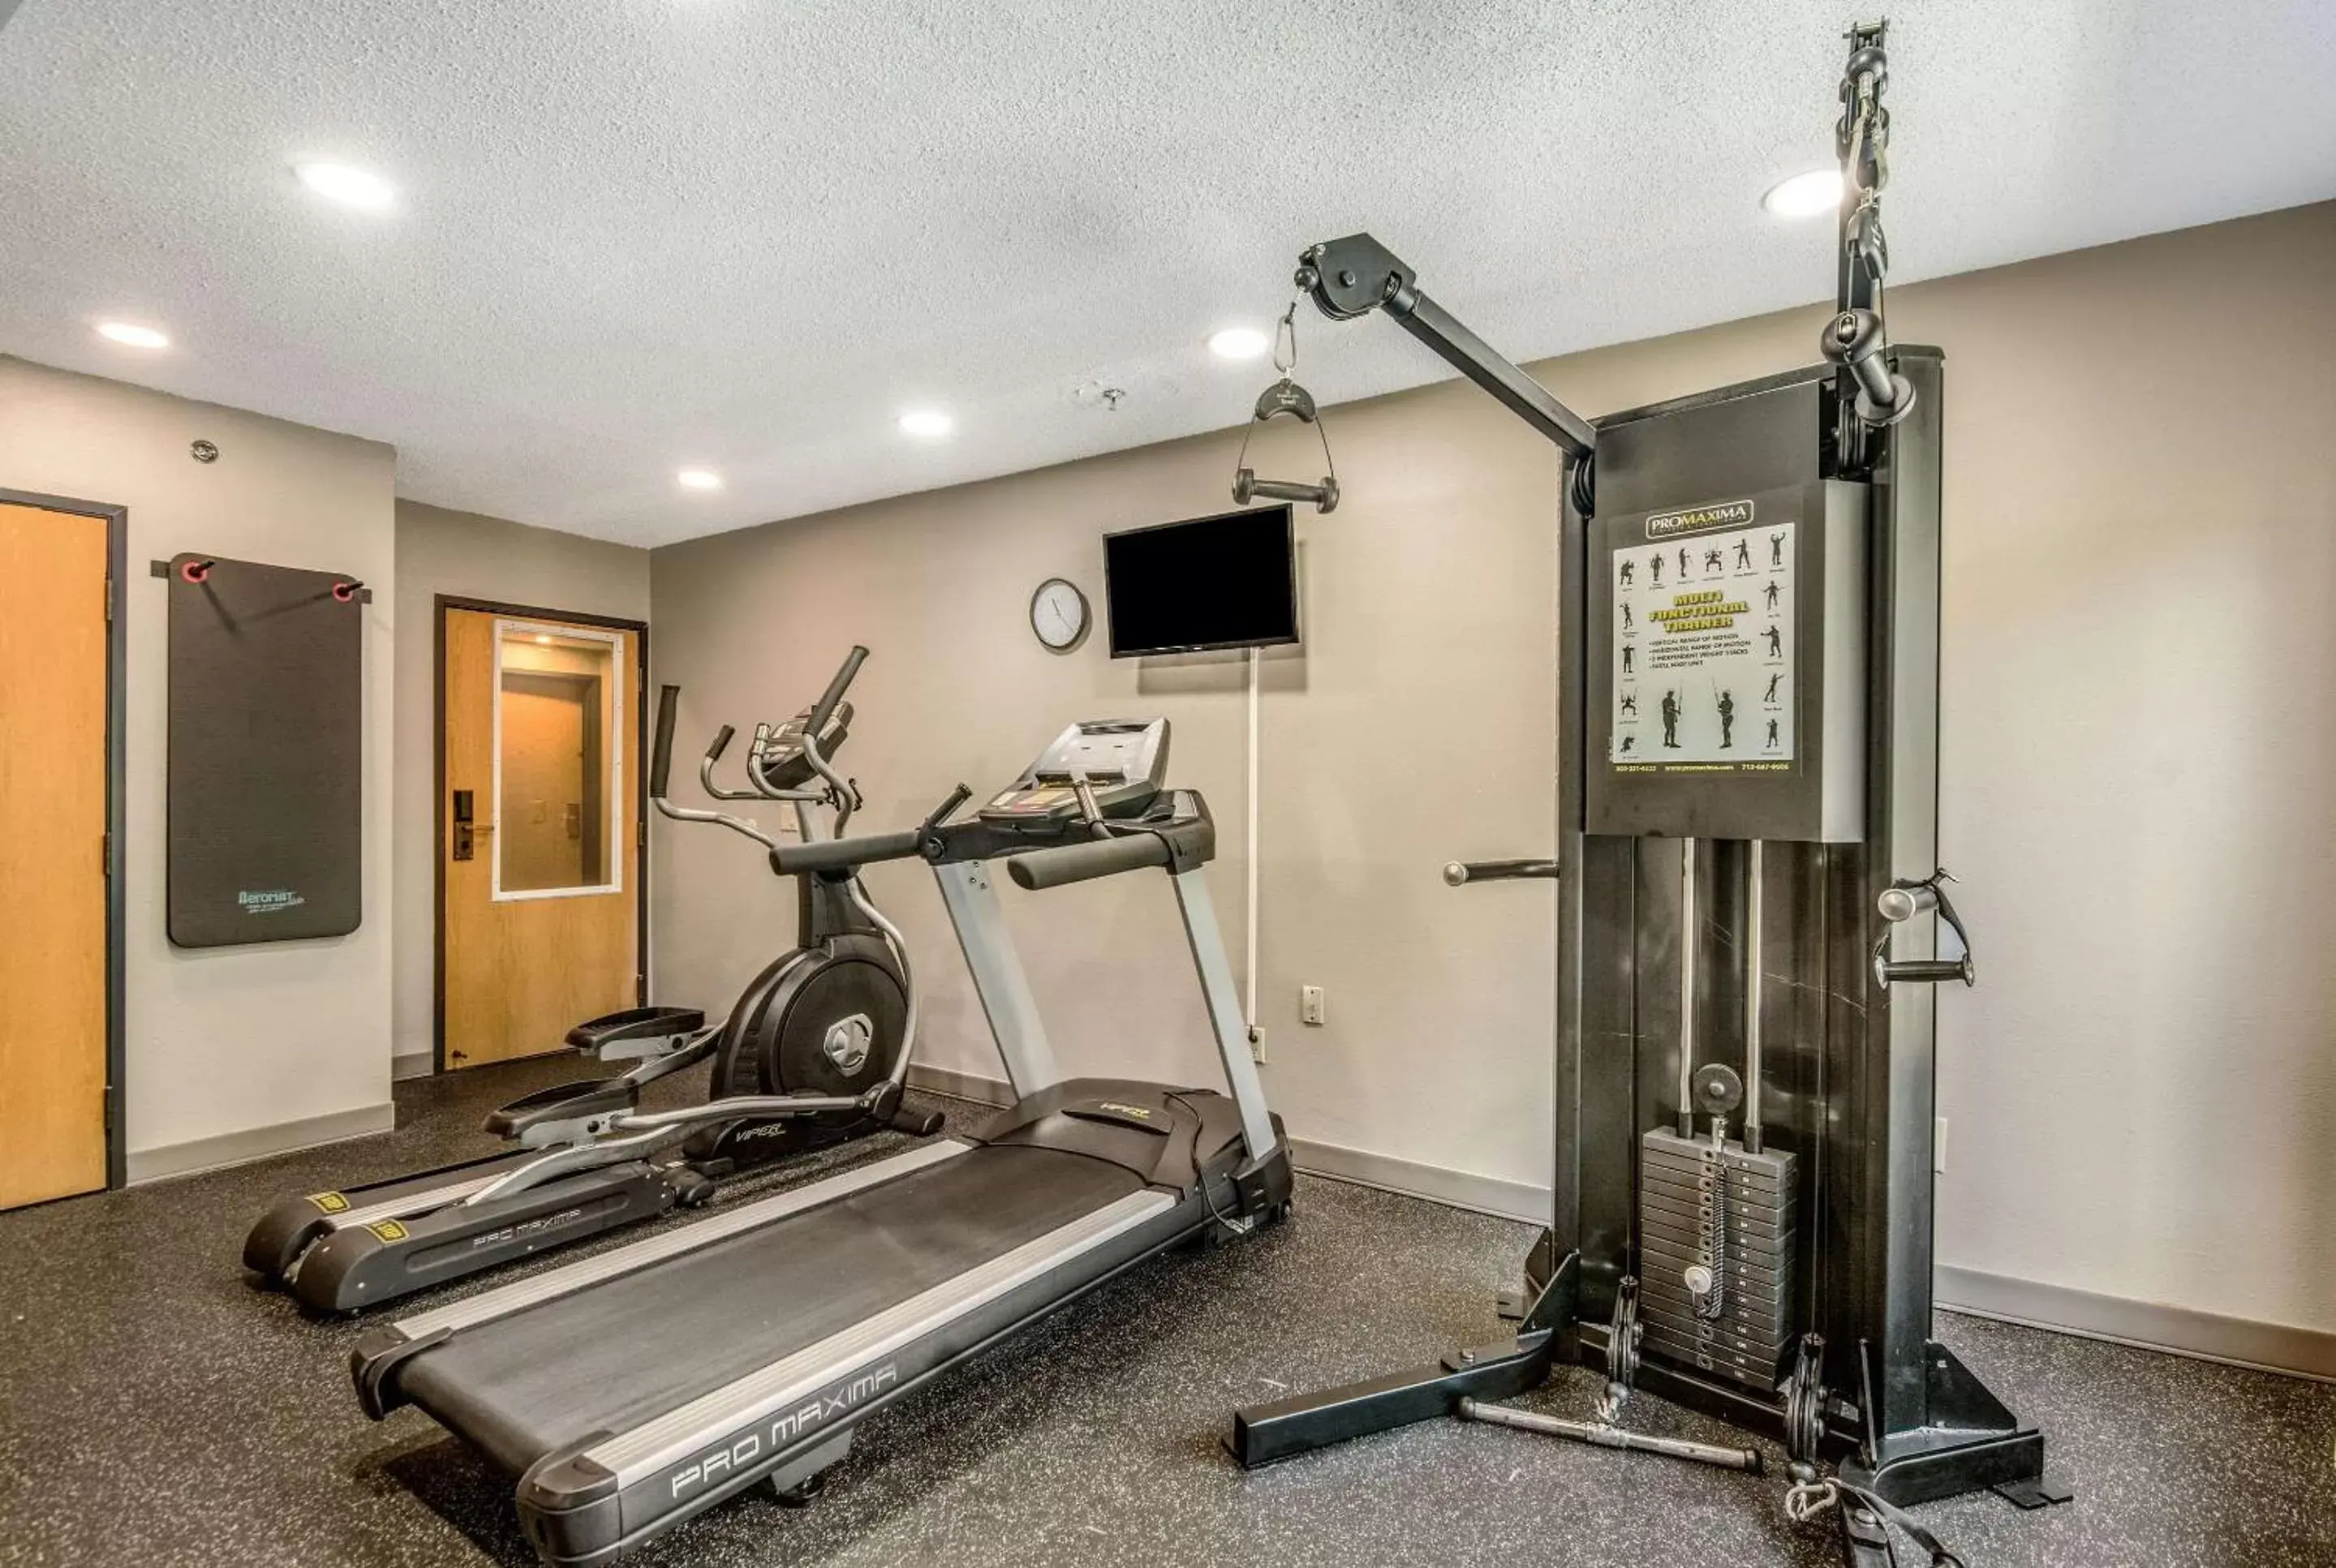 Fitness centre/facilities, Fitness Center/Facilities in Sleep Inn Fort Mill near Carowinds Blvd